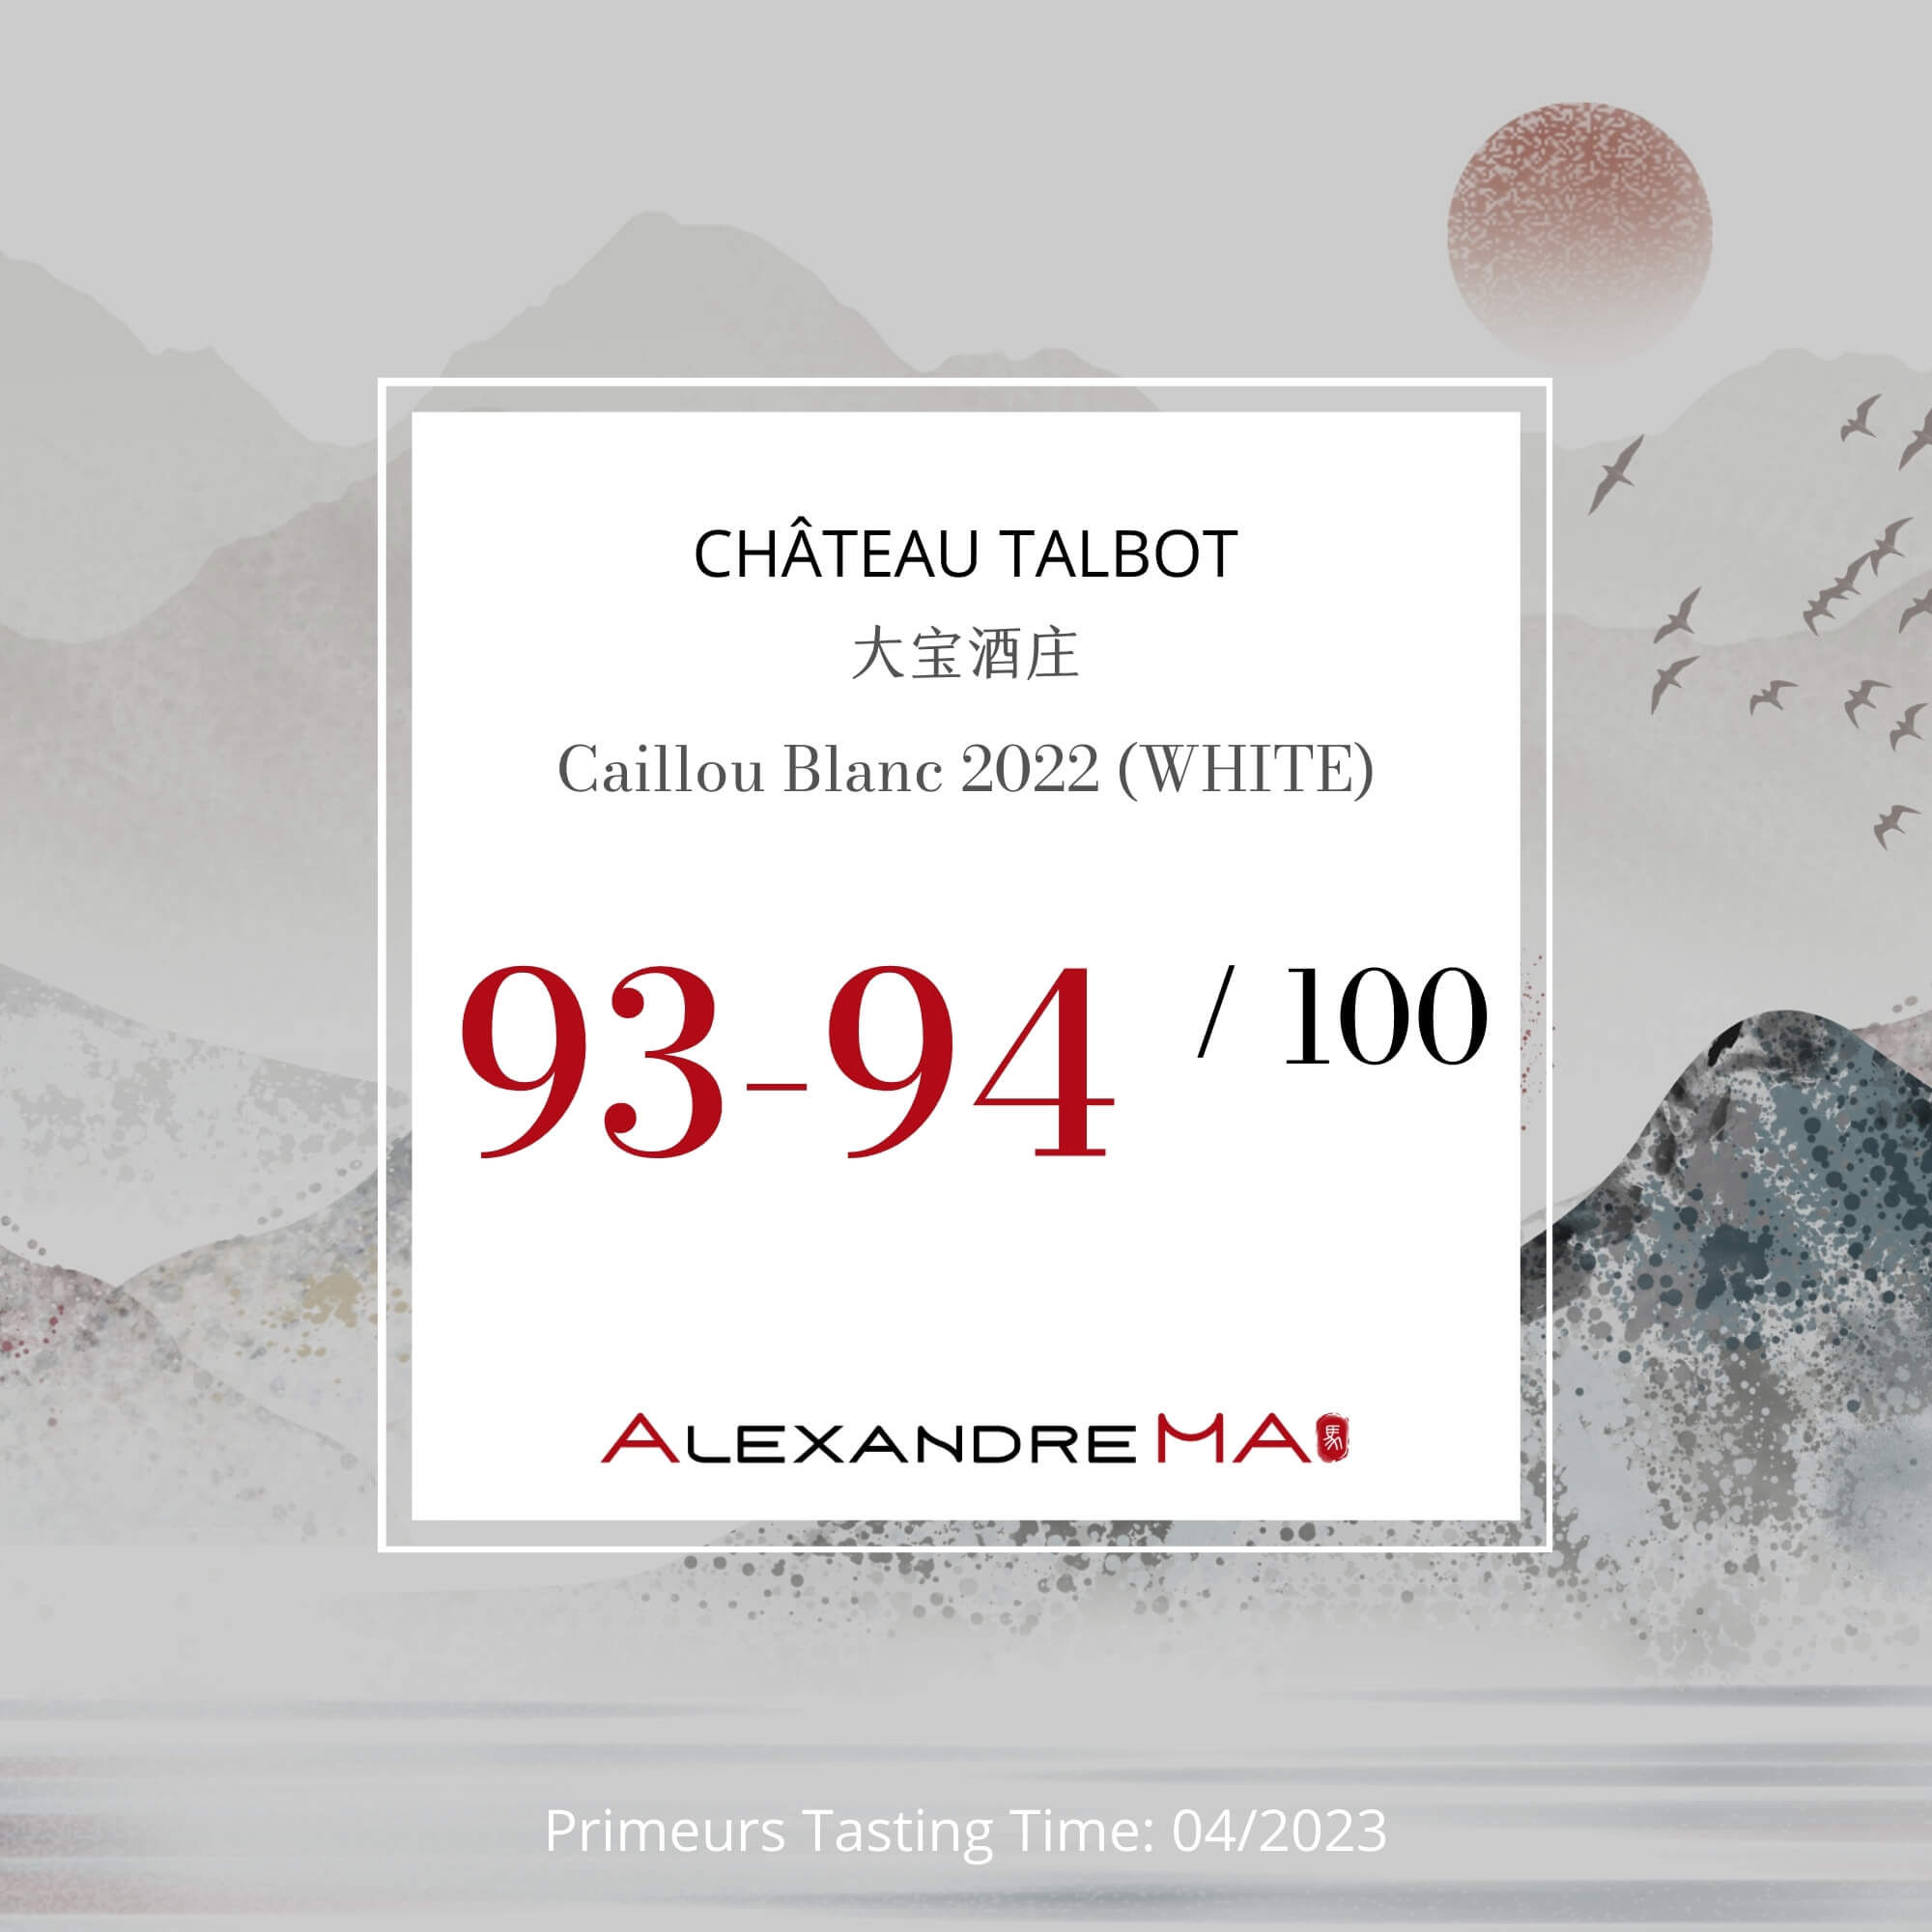 Château Talbot 大宝酒庄-Caillou Blanc 2022-White Primeurs - Alexandre Ma